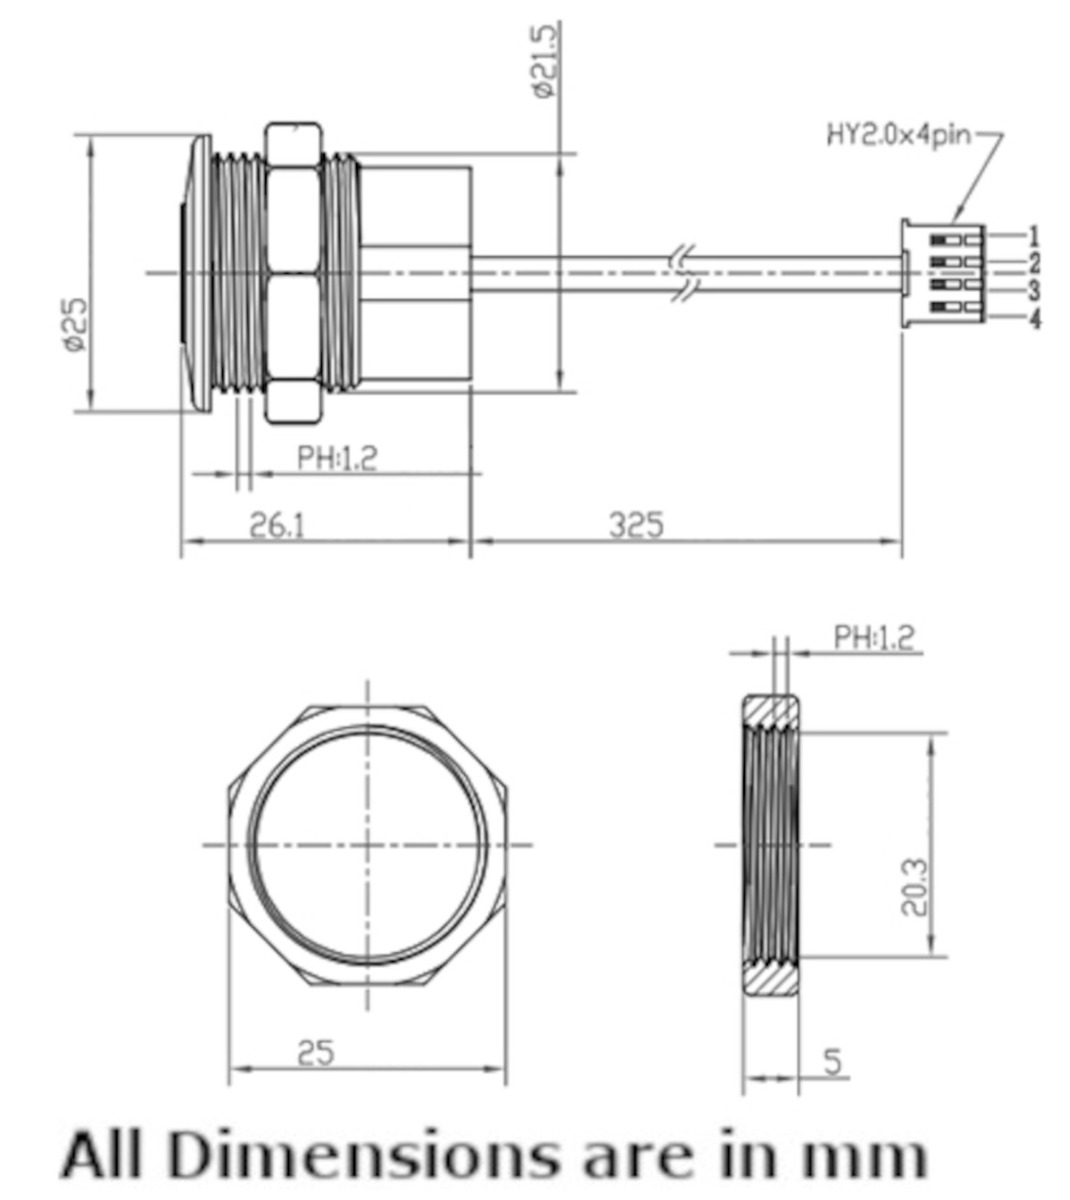 PB-A19 Ultrasonic Obstacle Avoidance Sensor Dimensions